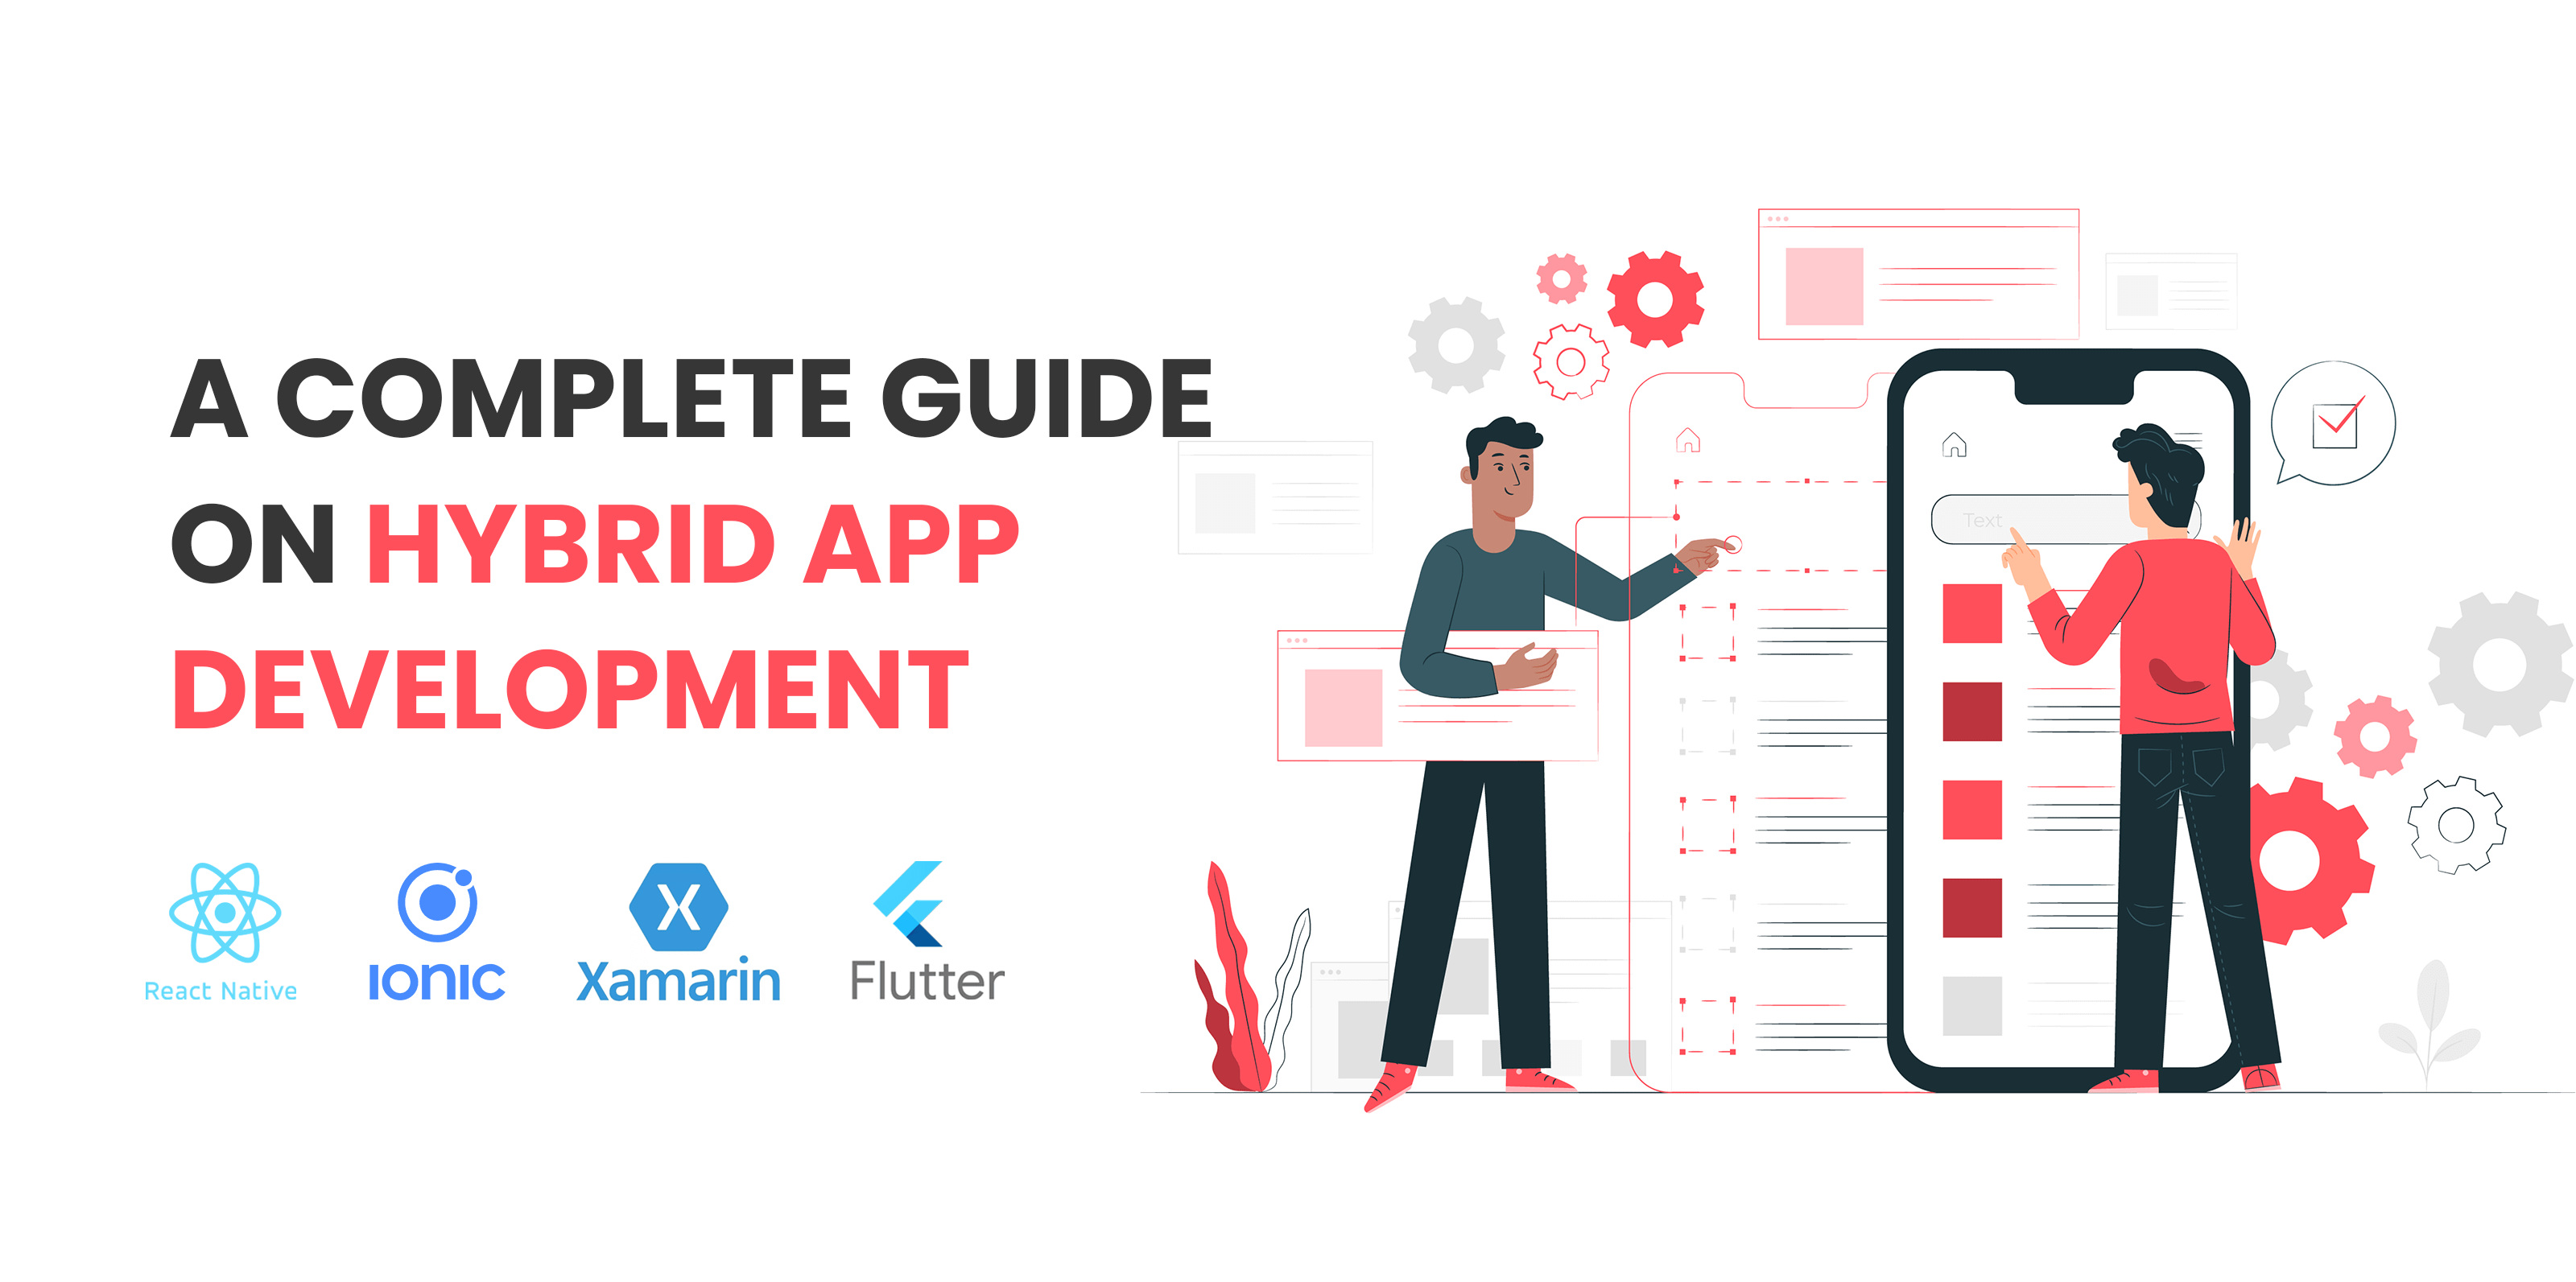 Hybrid-app-development-on-complete-guide-on-hybrid-app-development